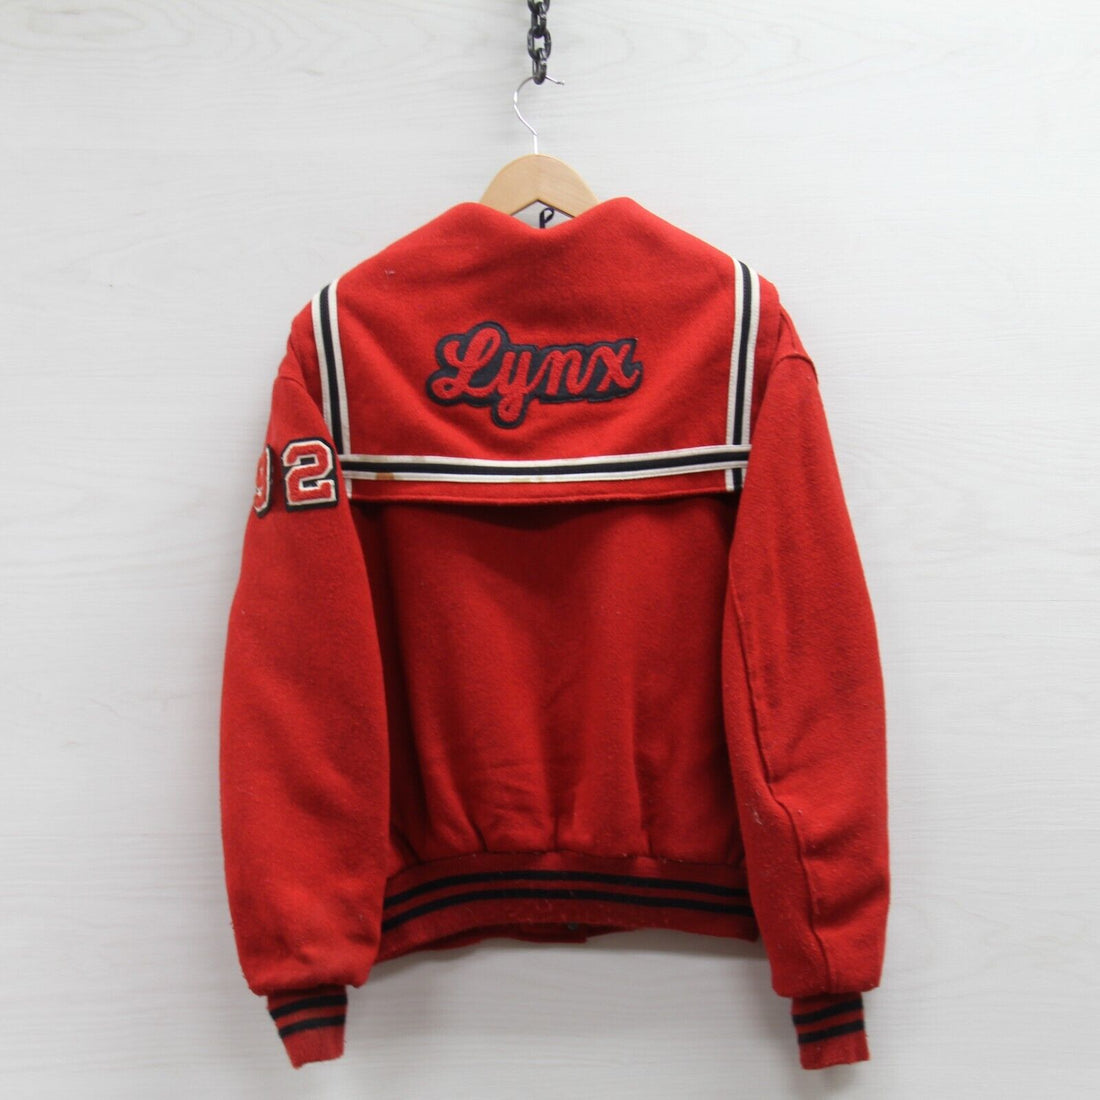 Vintage BV Lynx Wool Cheerleader Varsity Jacket Size 46 Red 1992 90s Made USA